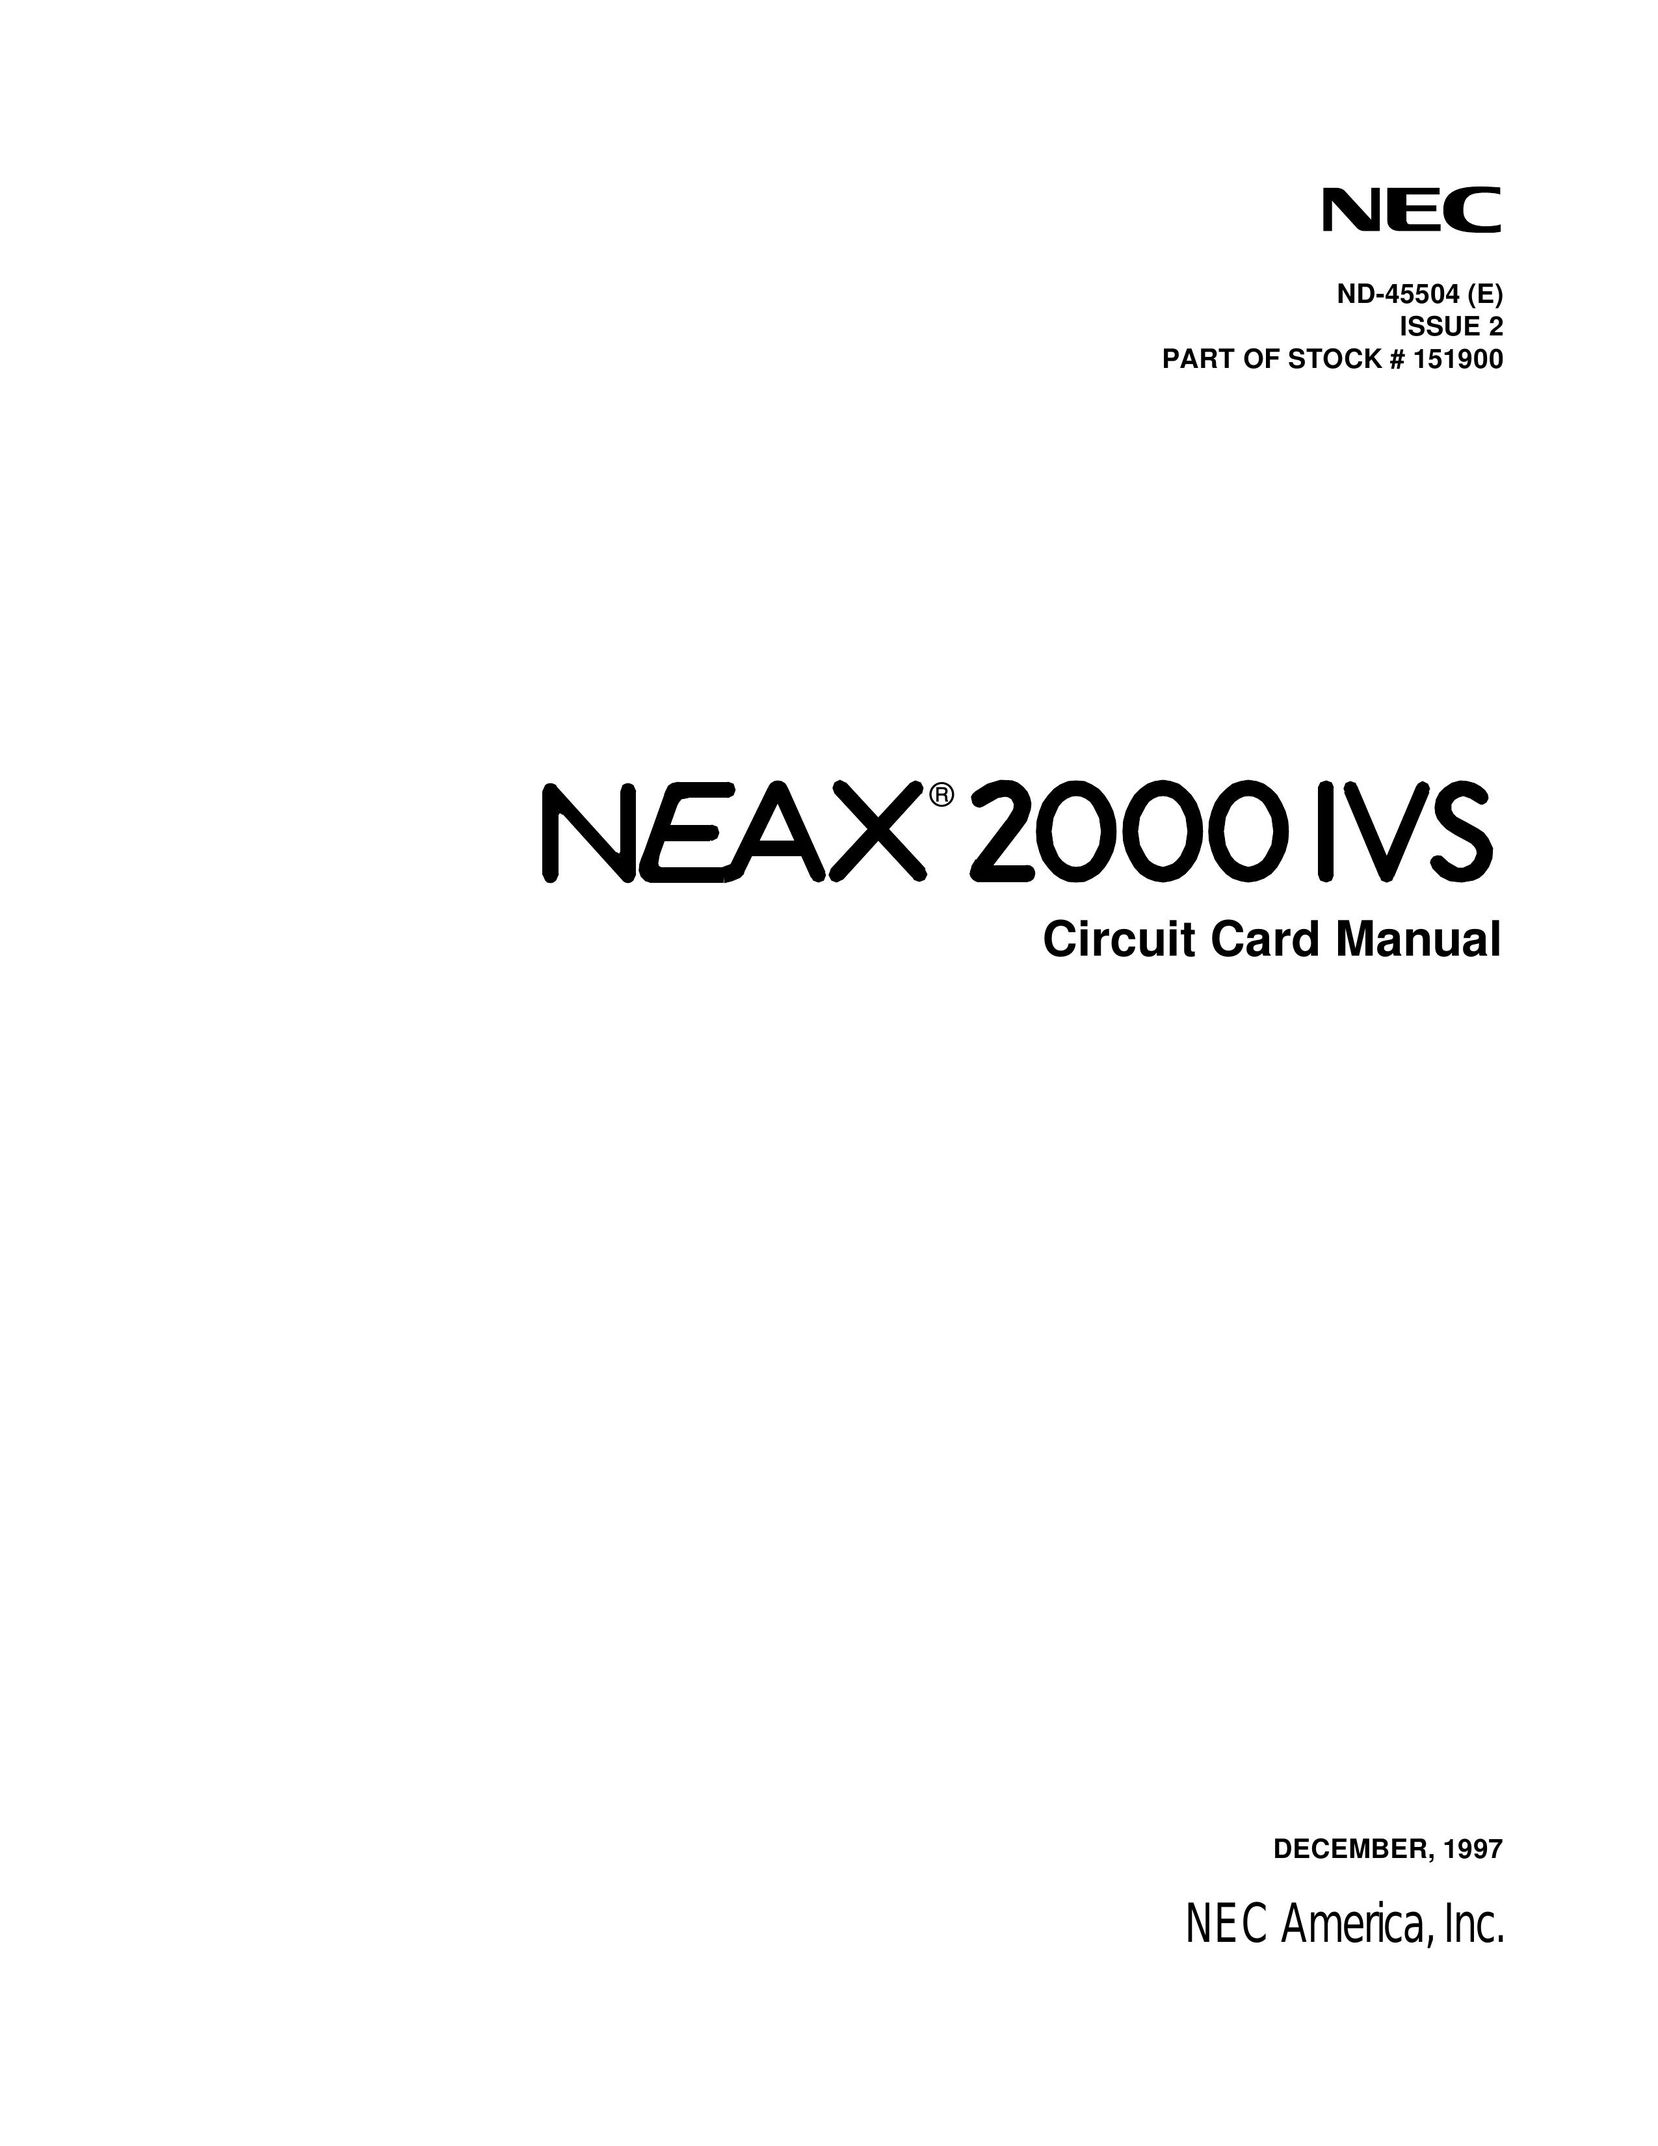 NEC 2000 IVS Computer Hardware User Manual